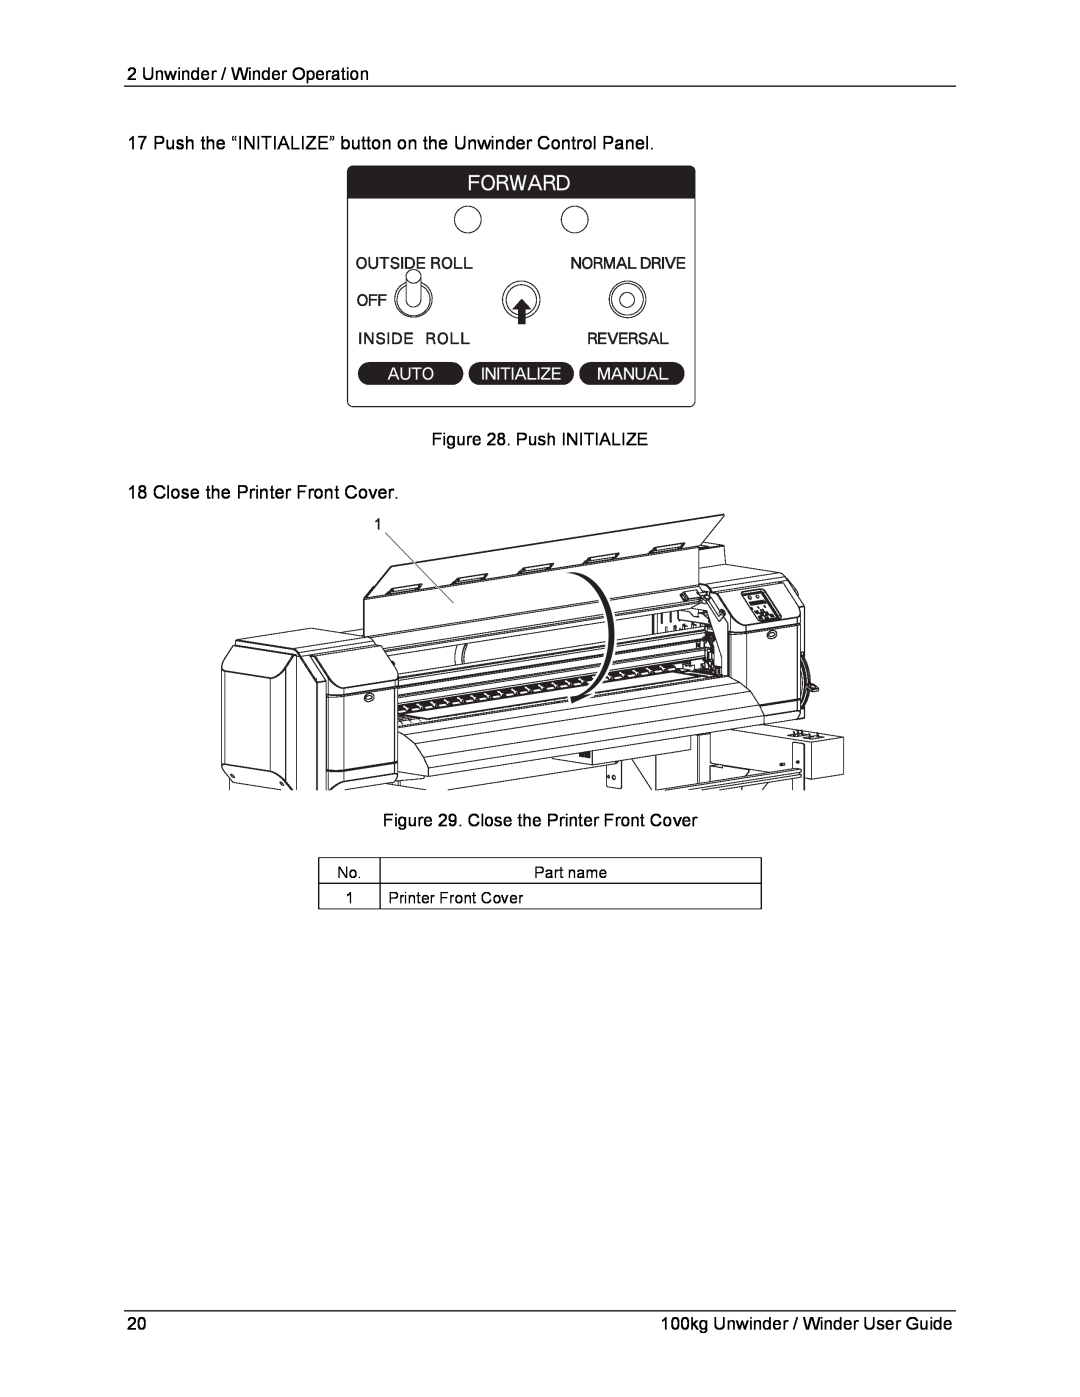 Xerox 8264E, 8254E manual Close the Printer Front Cover, Unwinder / Winder Operation, Push INITIALIZE 